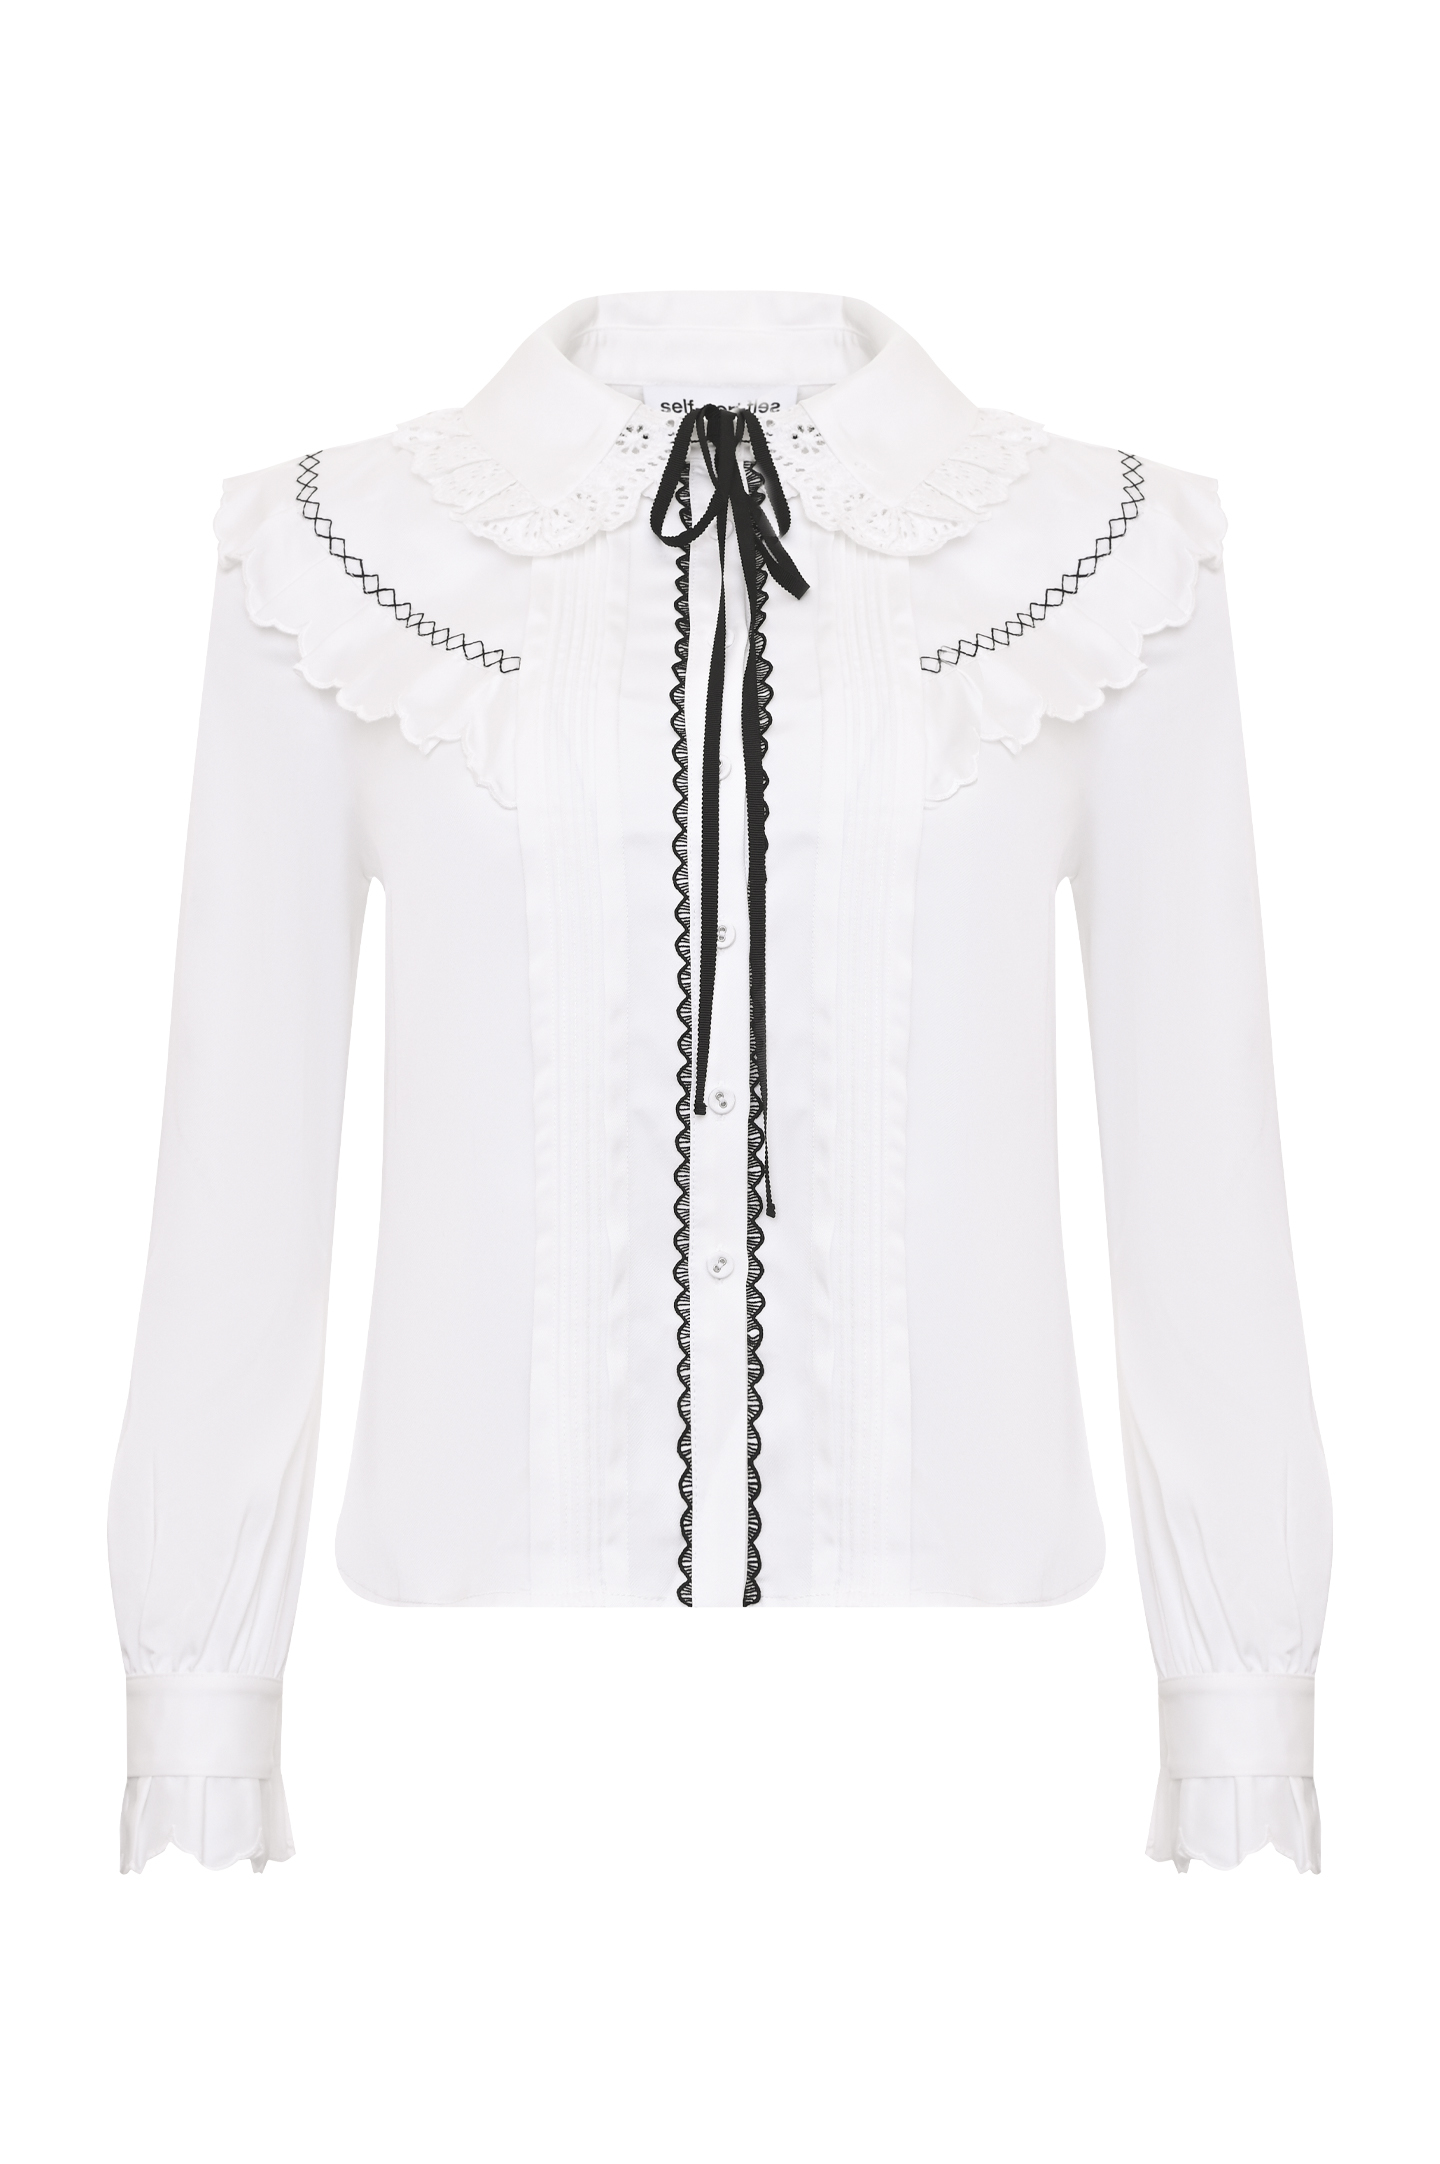 Блуза SELF PORTRAIT RS22-030T, цвет: Белый, Женский